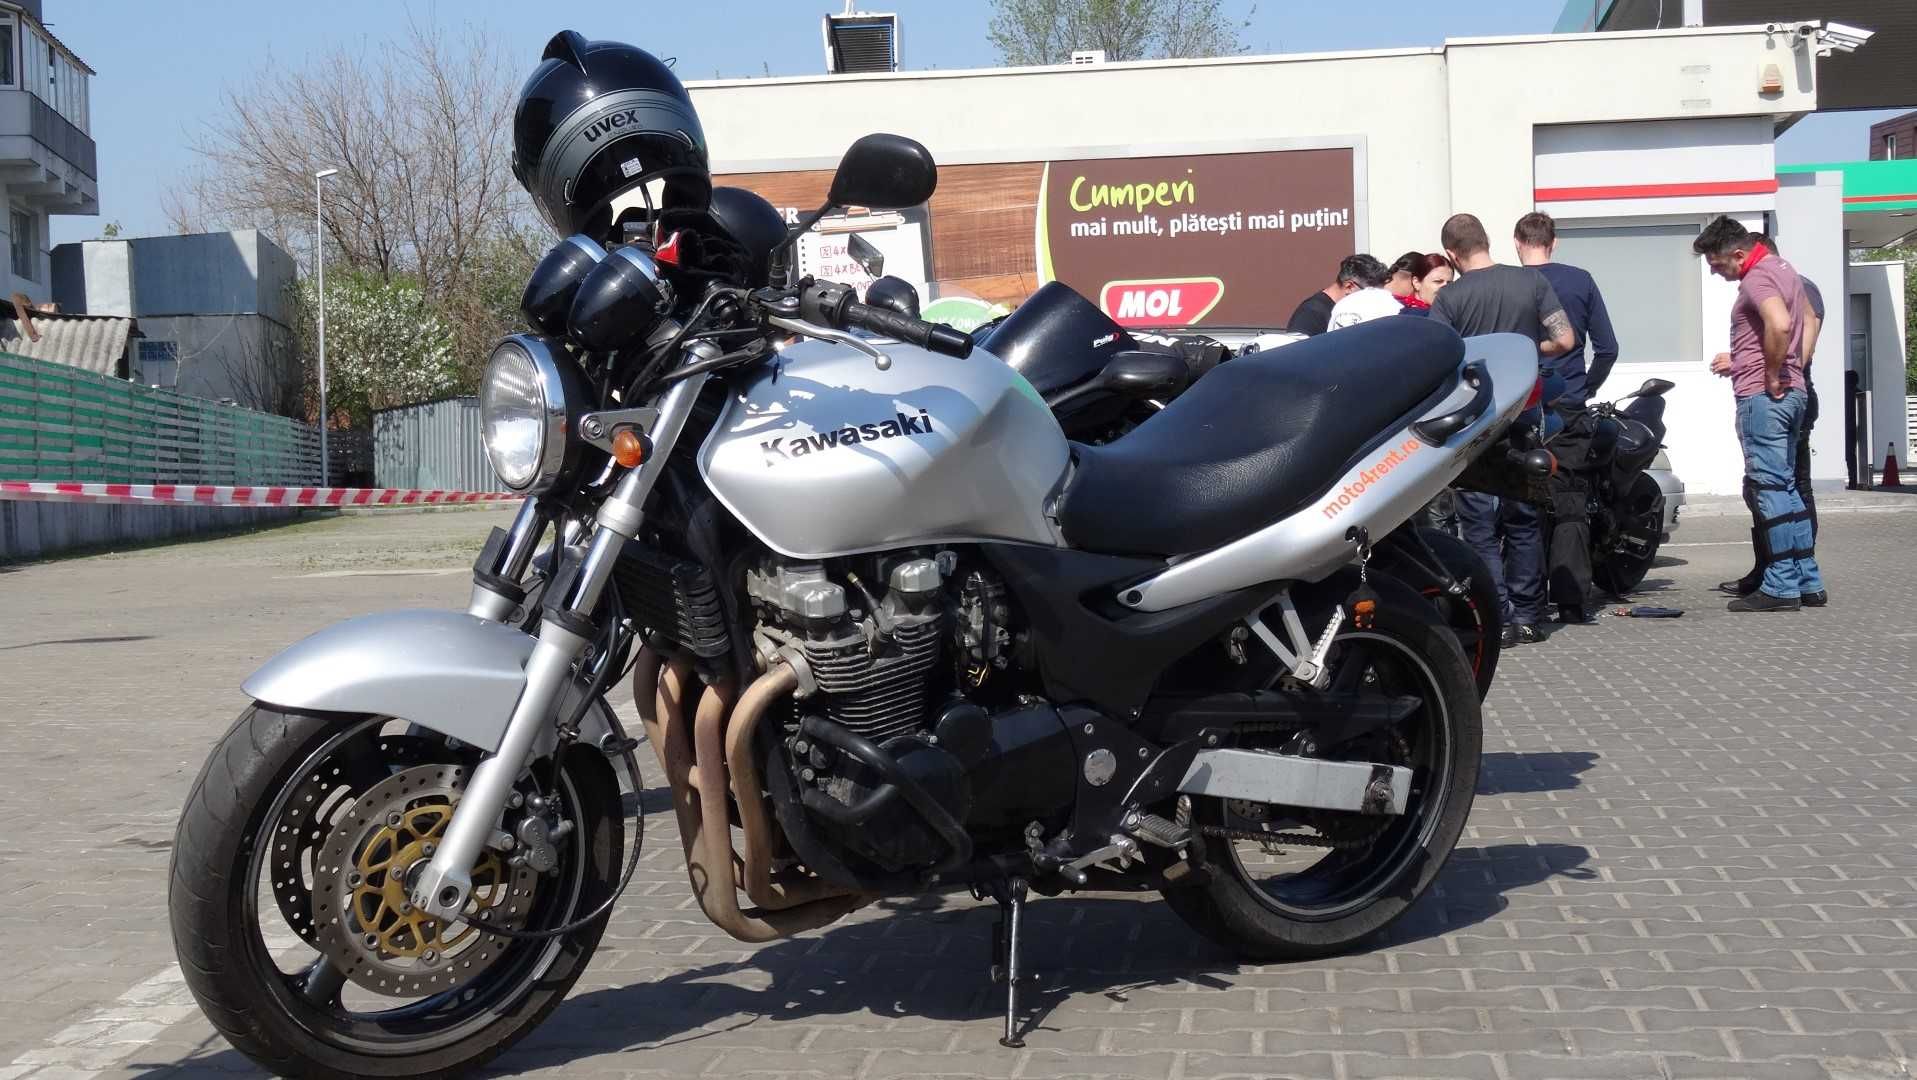 Inchiriez motocicleta, inchiriere motociclete Bucuresti, MOTO4RENT